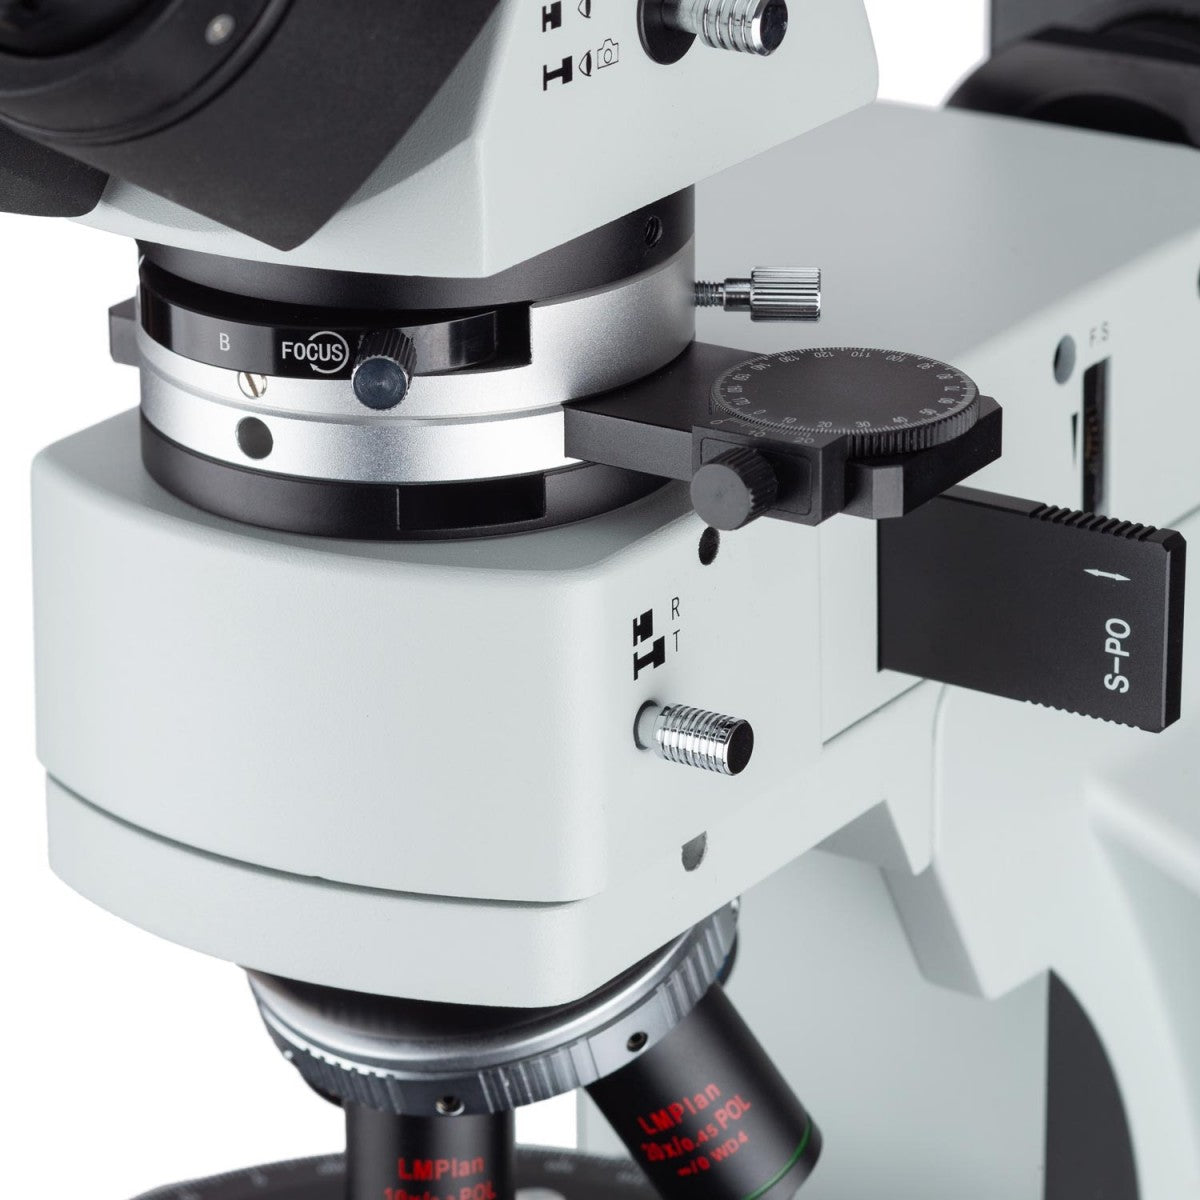 50X-500X High-performance Upright Polarized-light Microscope